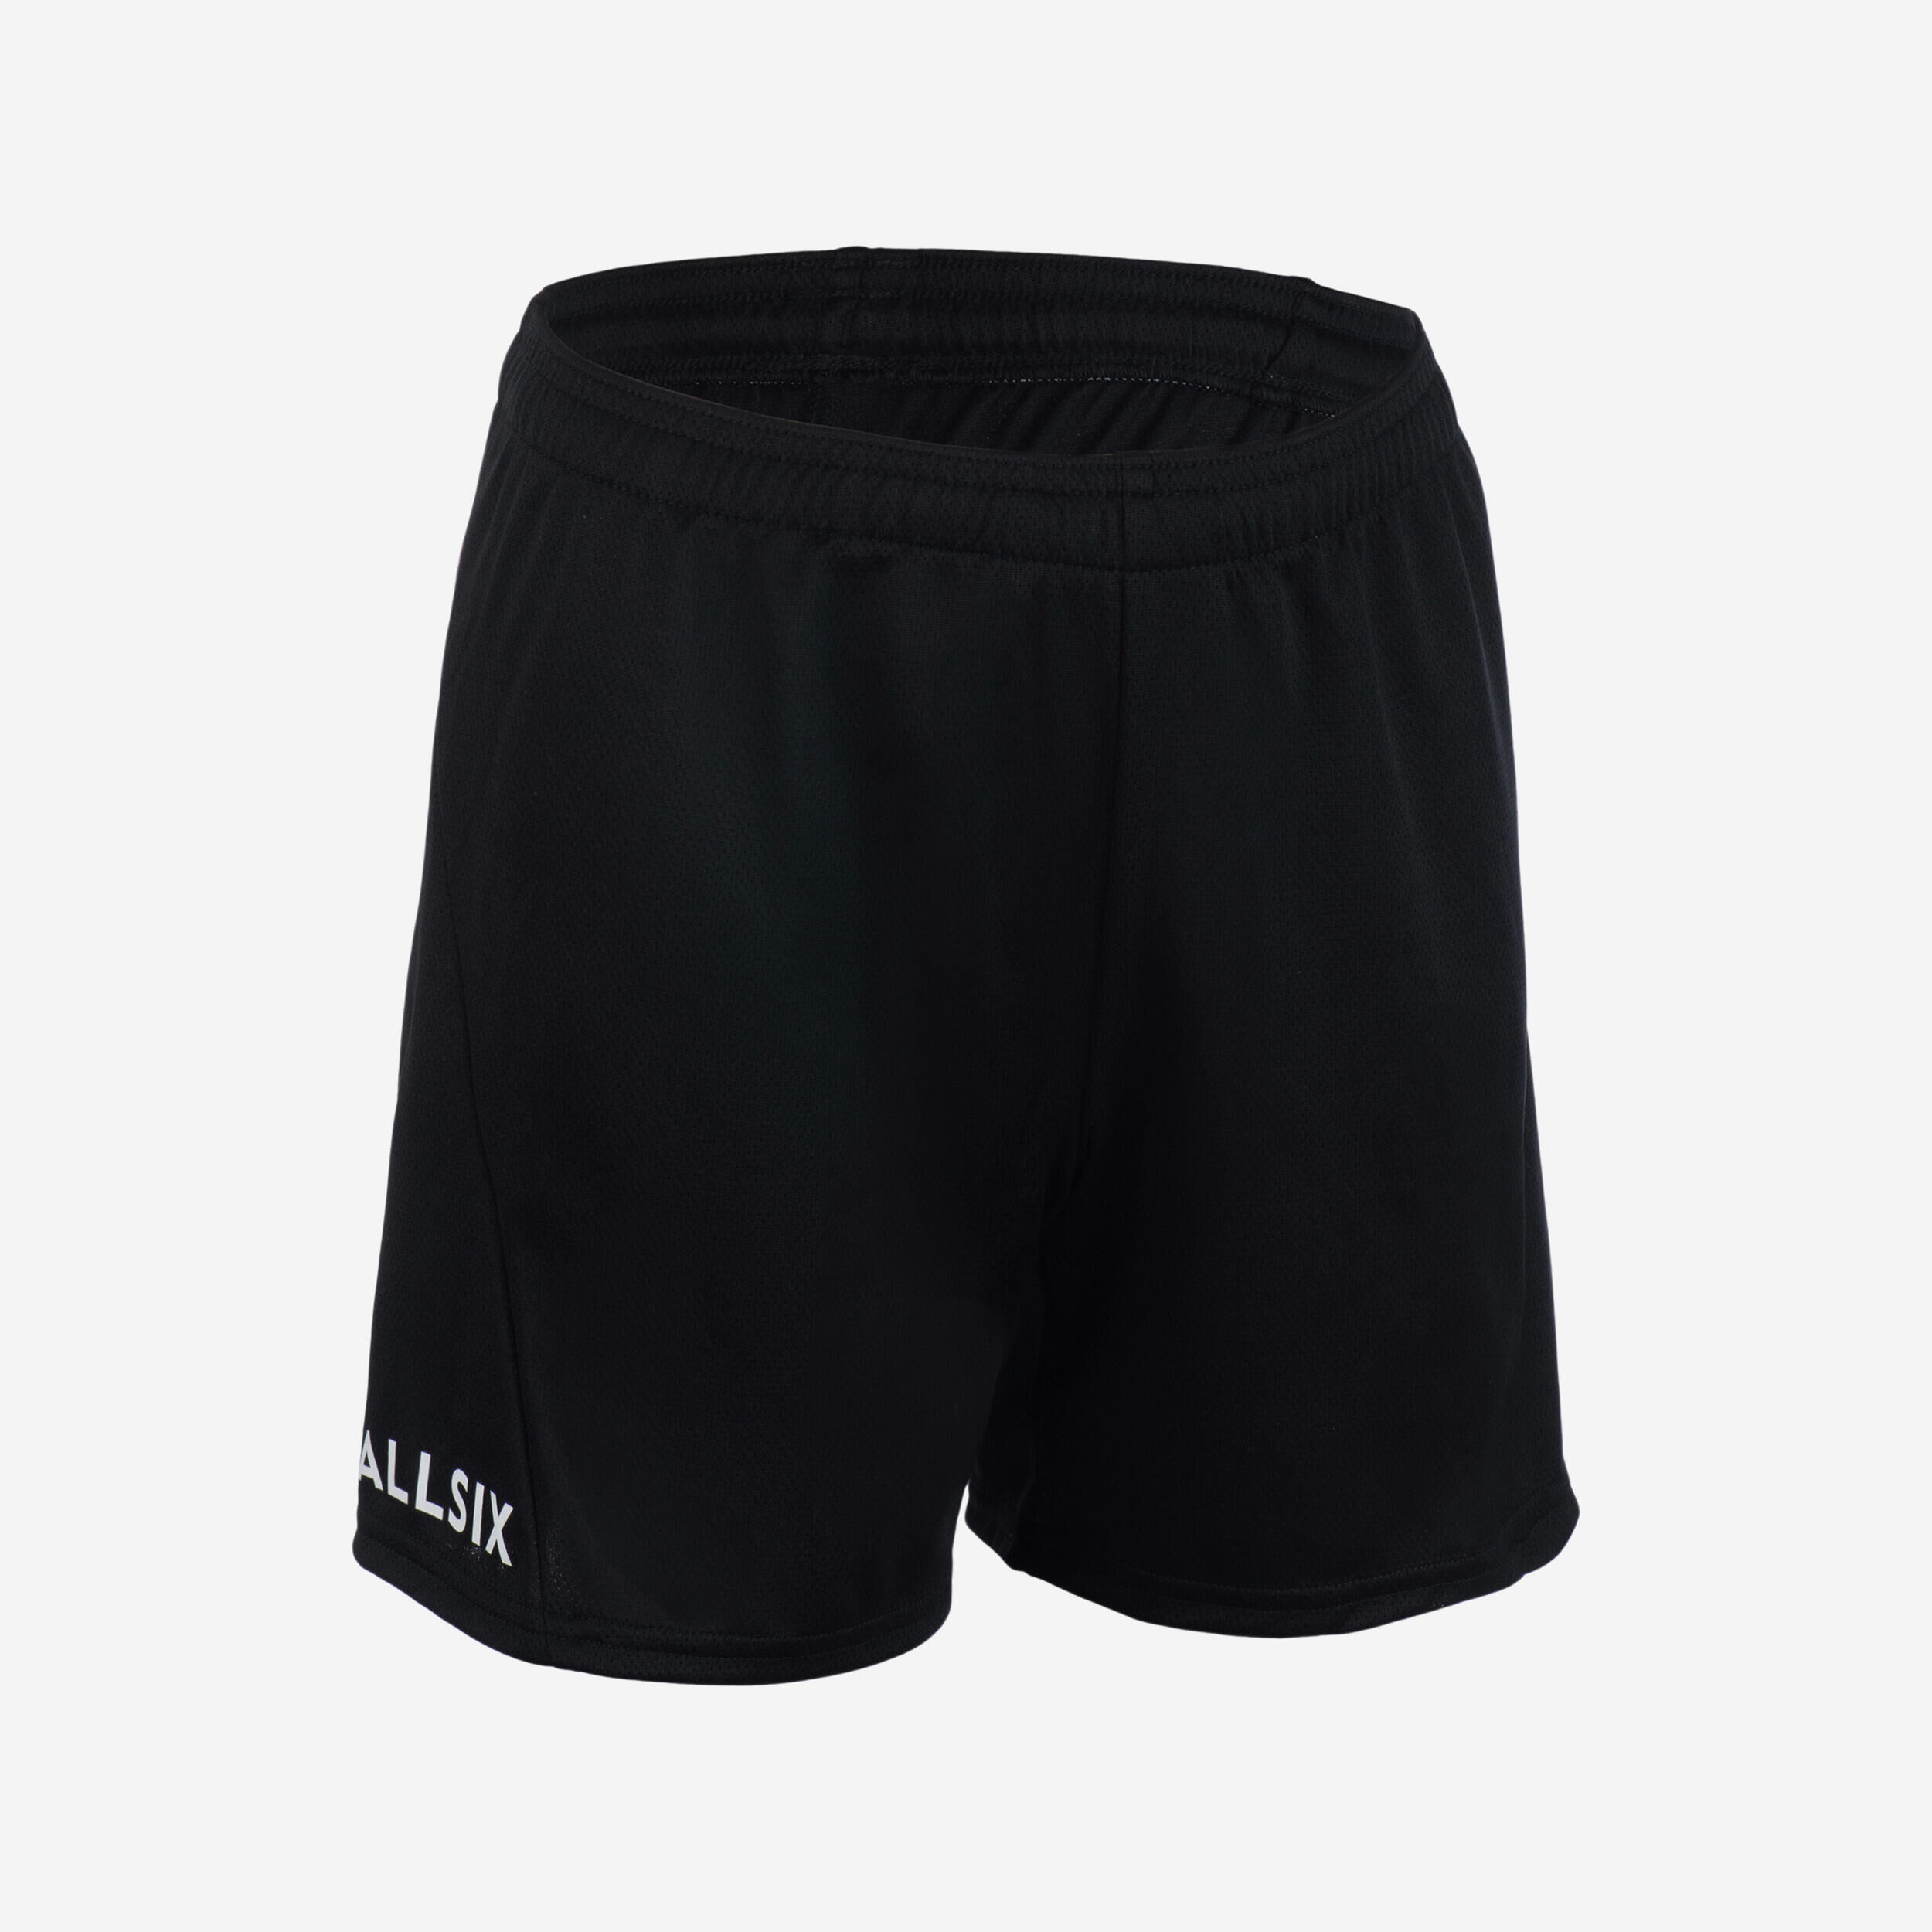 ALLSIX V100 Boys' Volleyball Shorts - Black